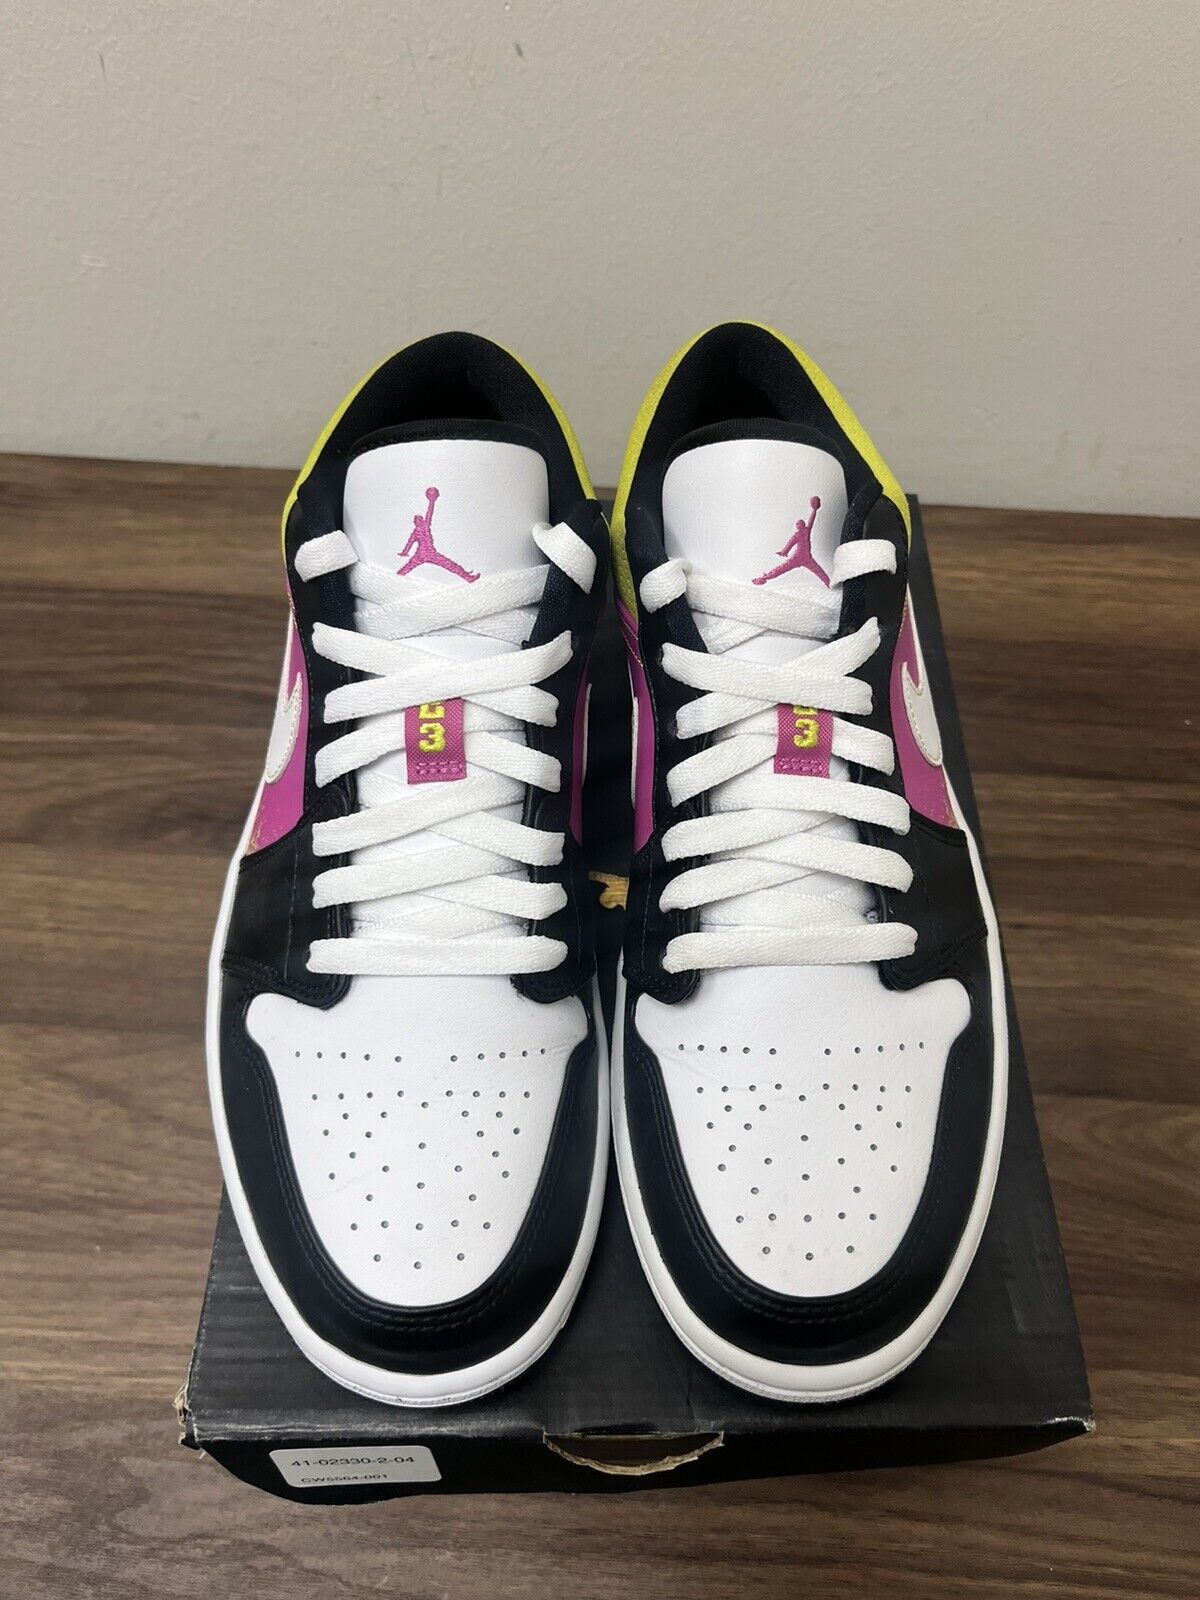 Nike Air Jordan 1 Men's Low Spray Paint CW5564-001 Sneakers Shoes size 8.5